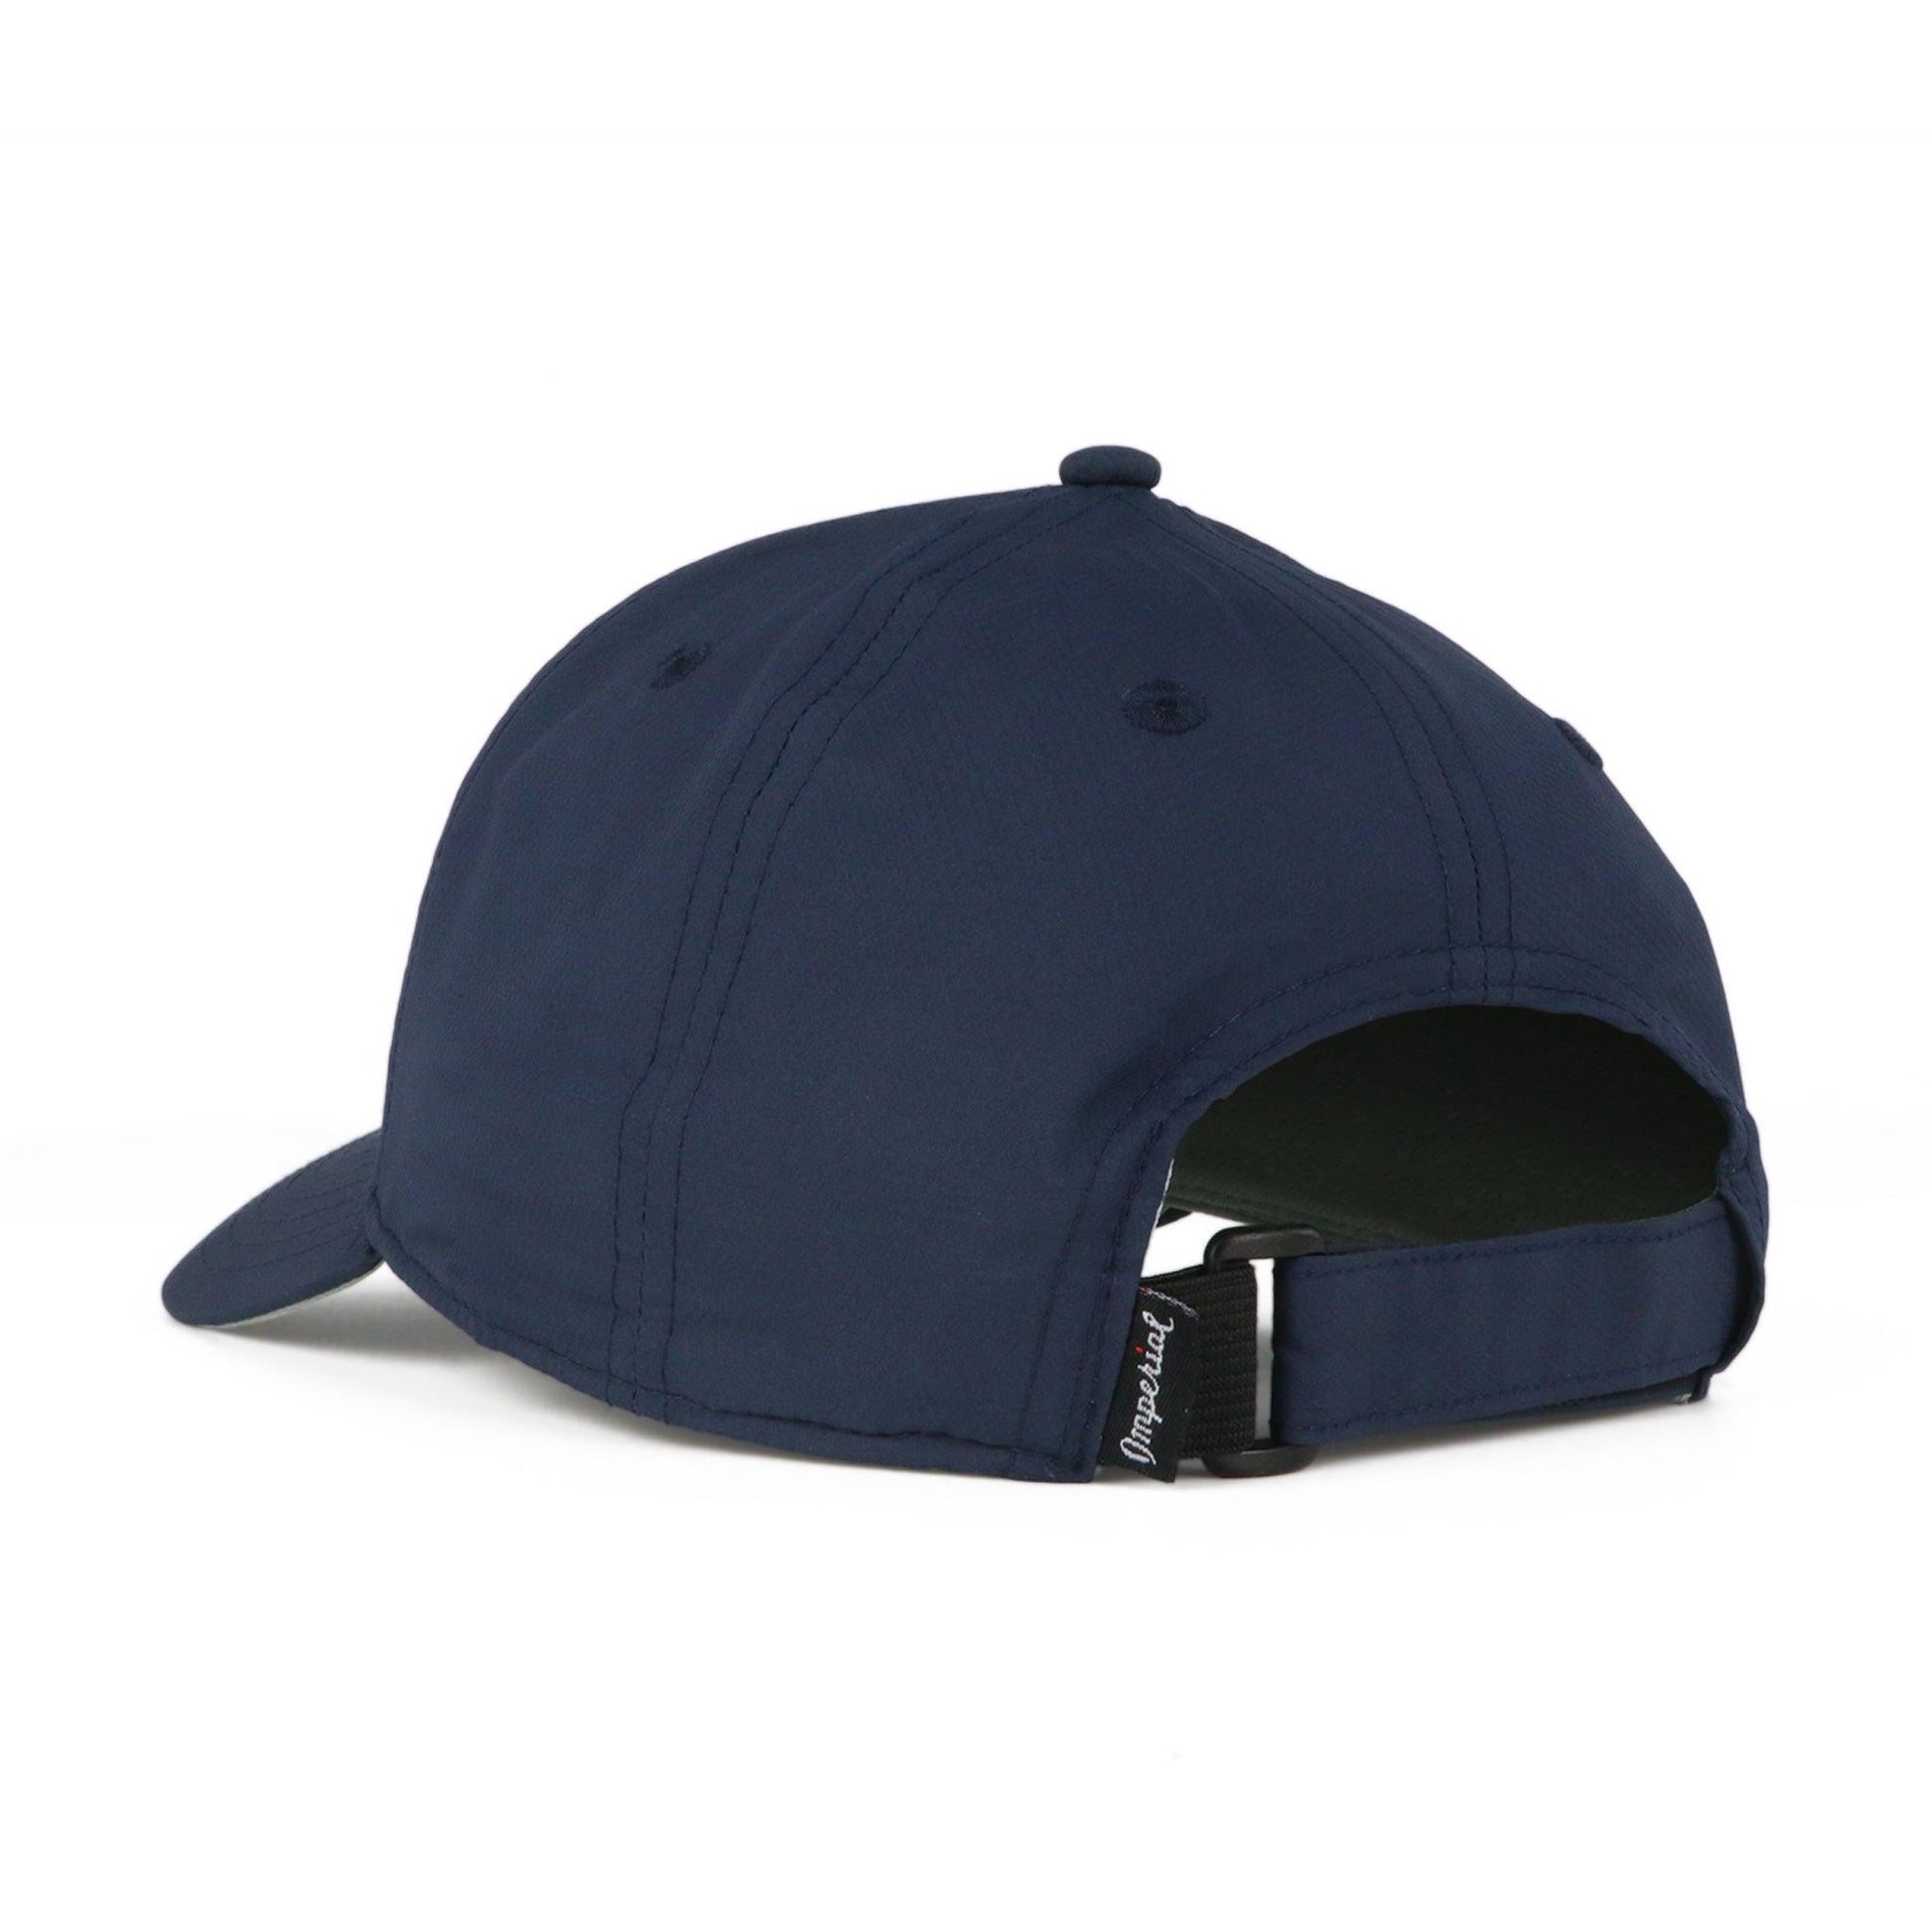 Michelob ultra classic logo hat back 